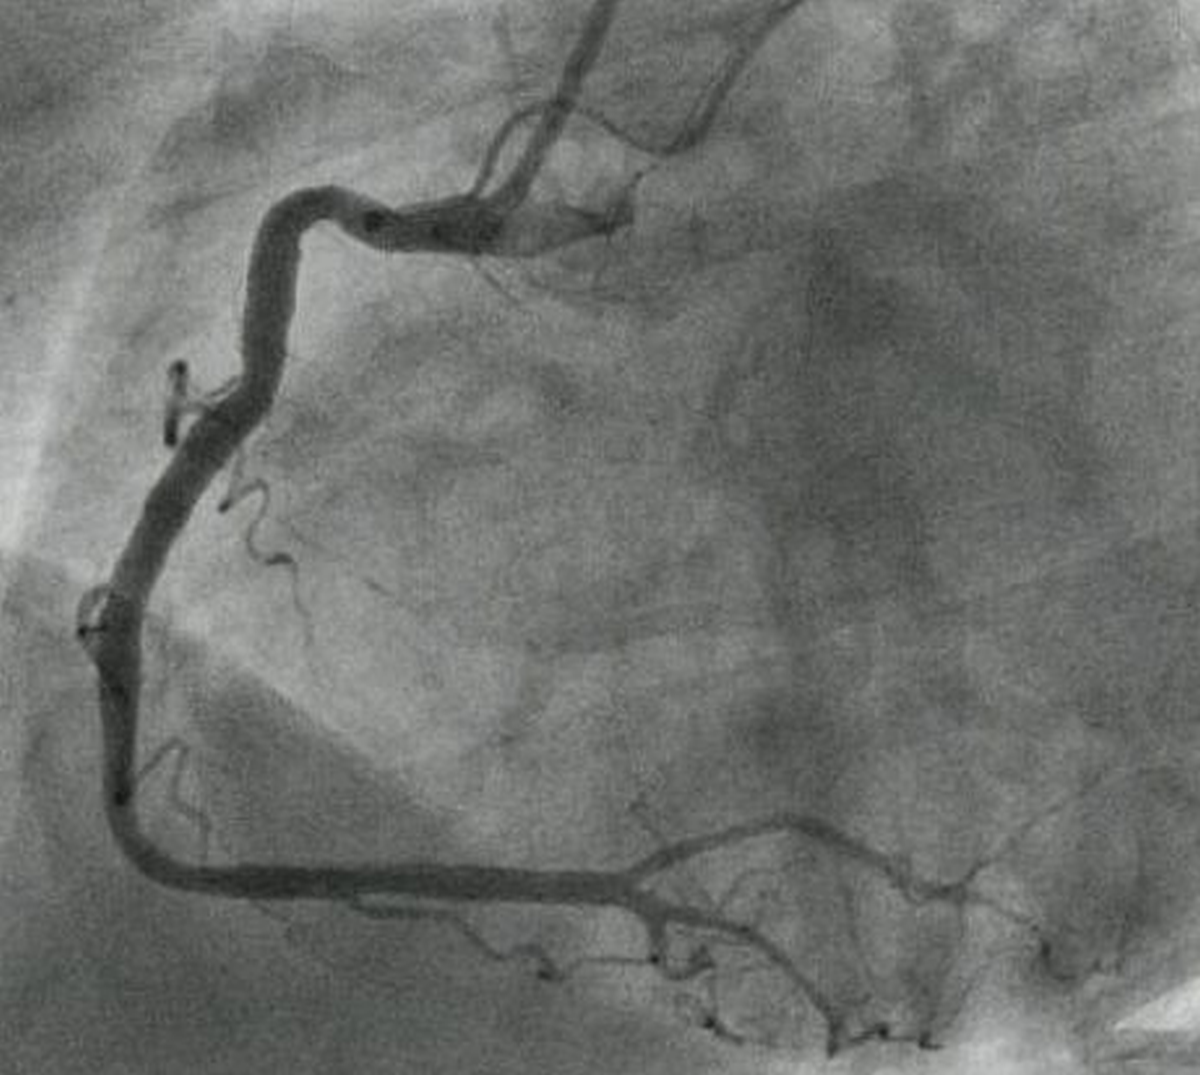 Right coronary angiogram in LAO view